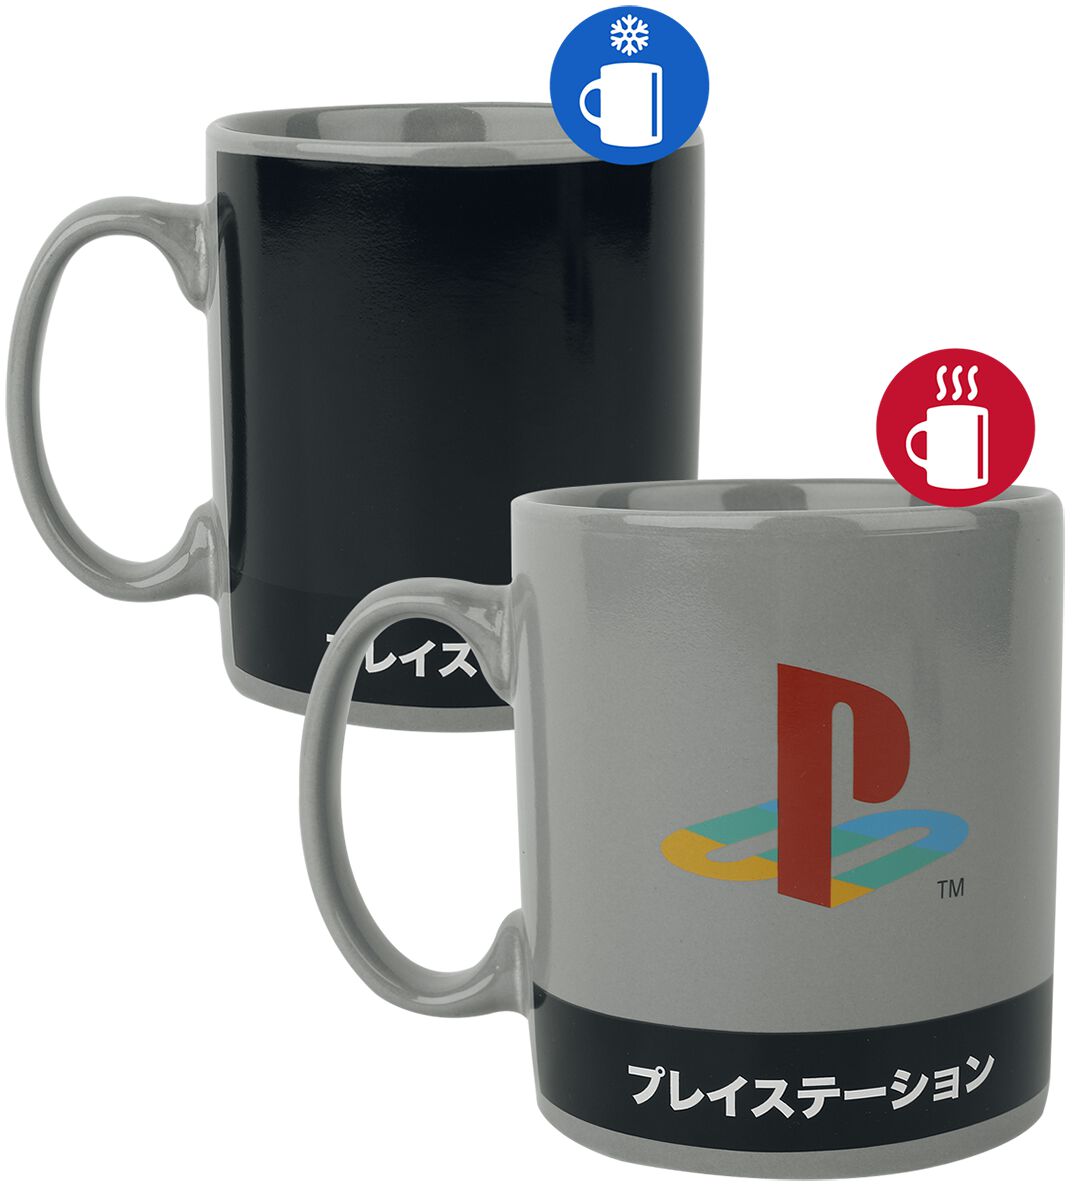 Playstation Heat Change Mug Cup multicolour